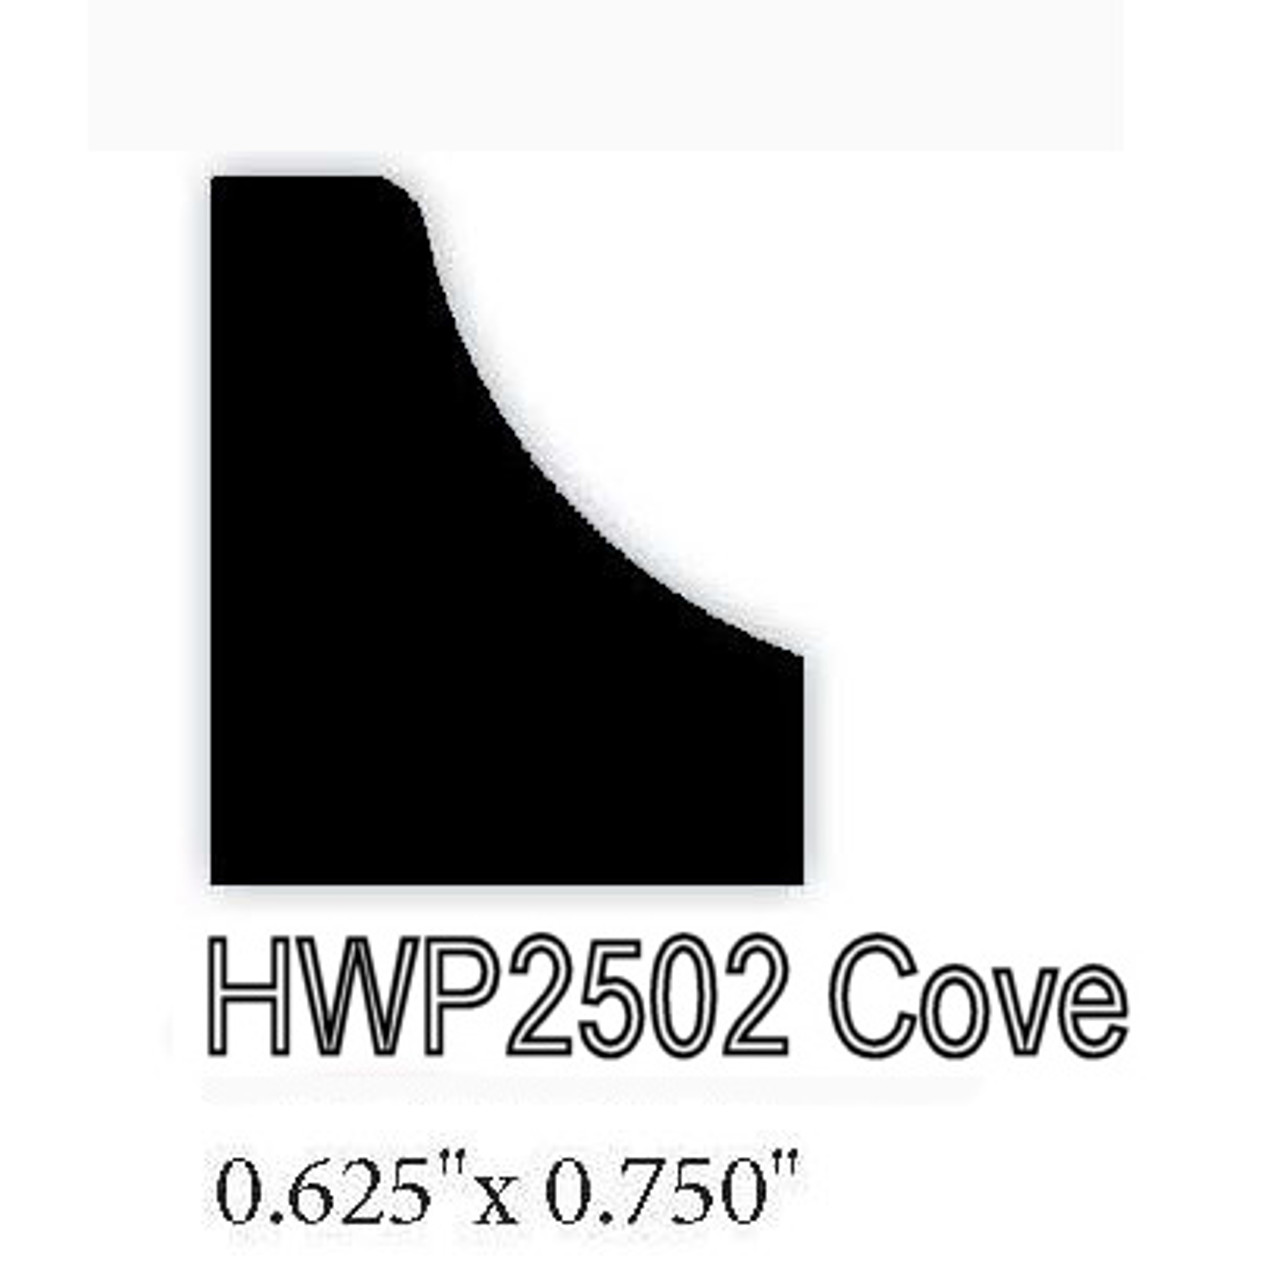 2502 .625" x 0.75" Cove Molding